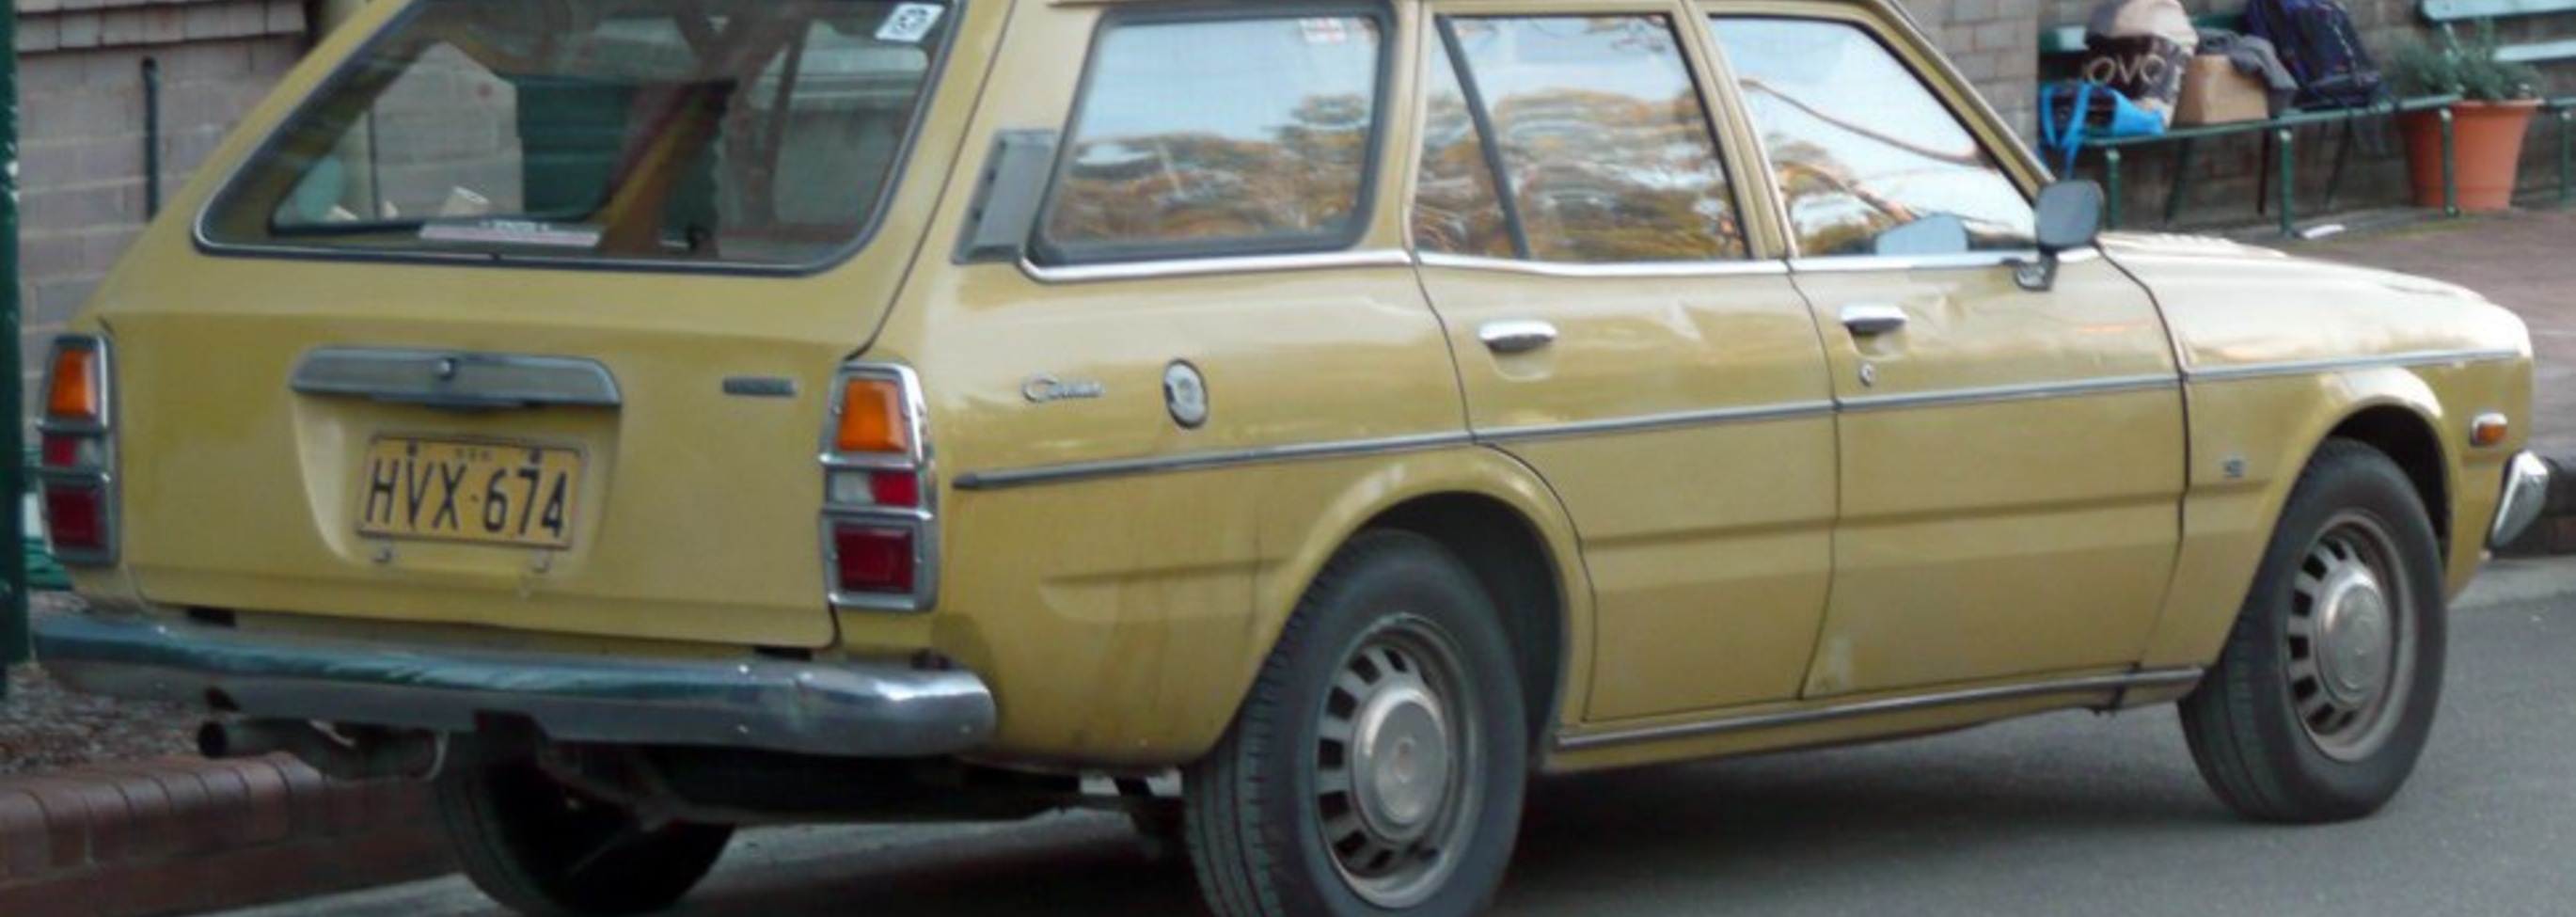 Toyota Corona Station Wagon (RT118) 2.0 (88 Hp) 1973, 1974, 1975, 1976, 1977, 1978, 1979 